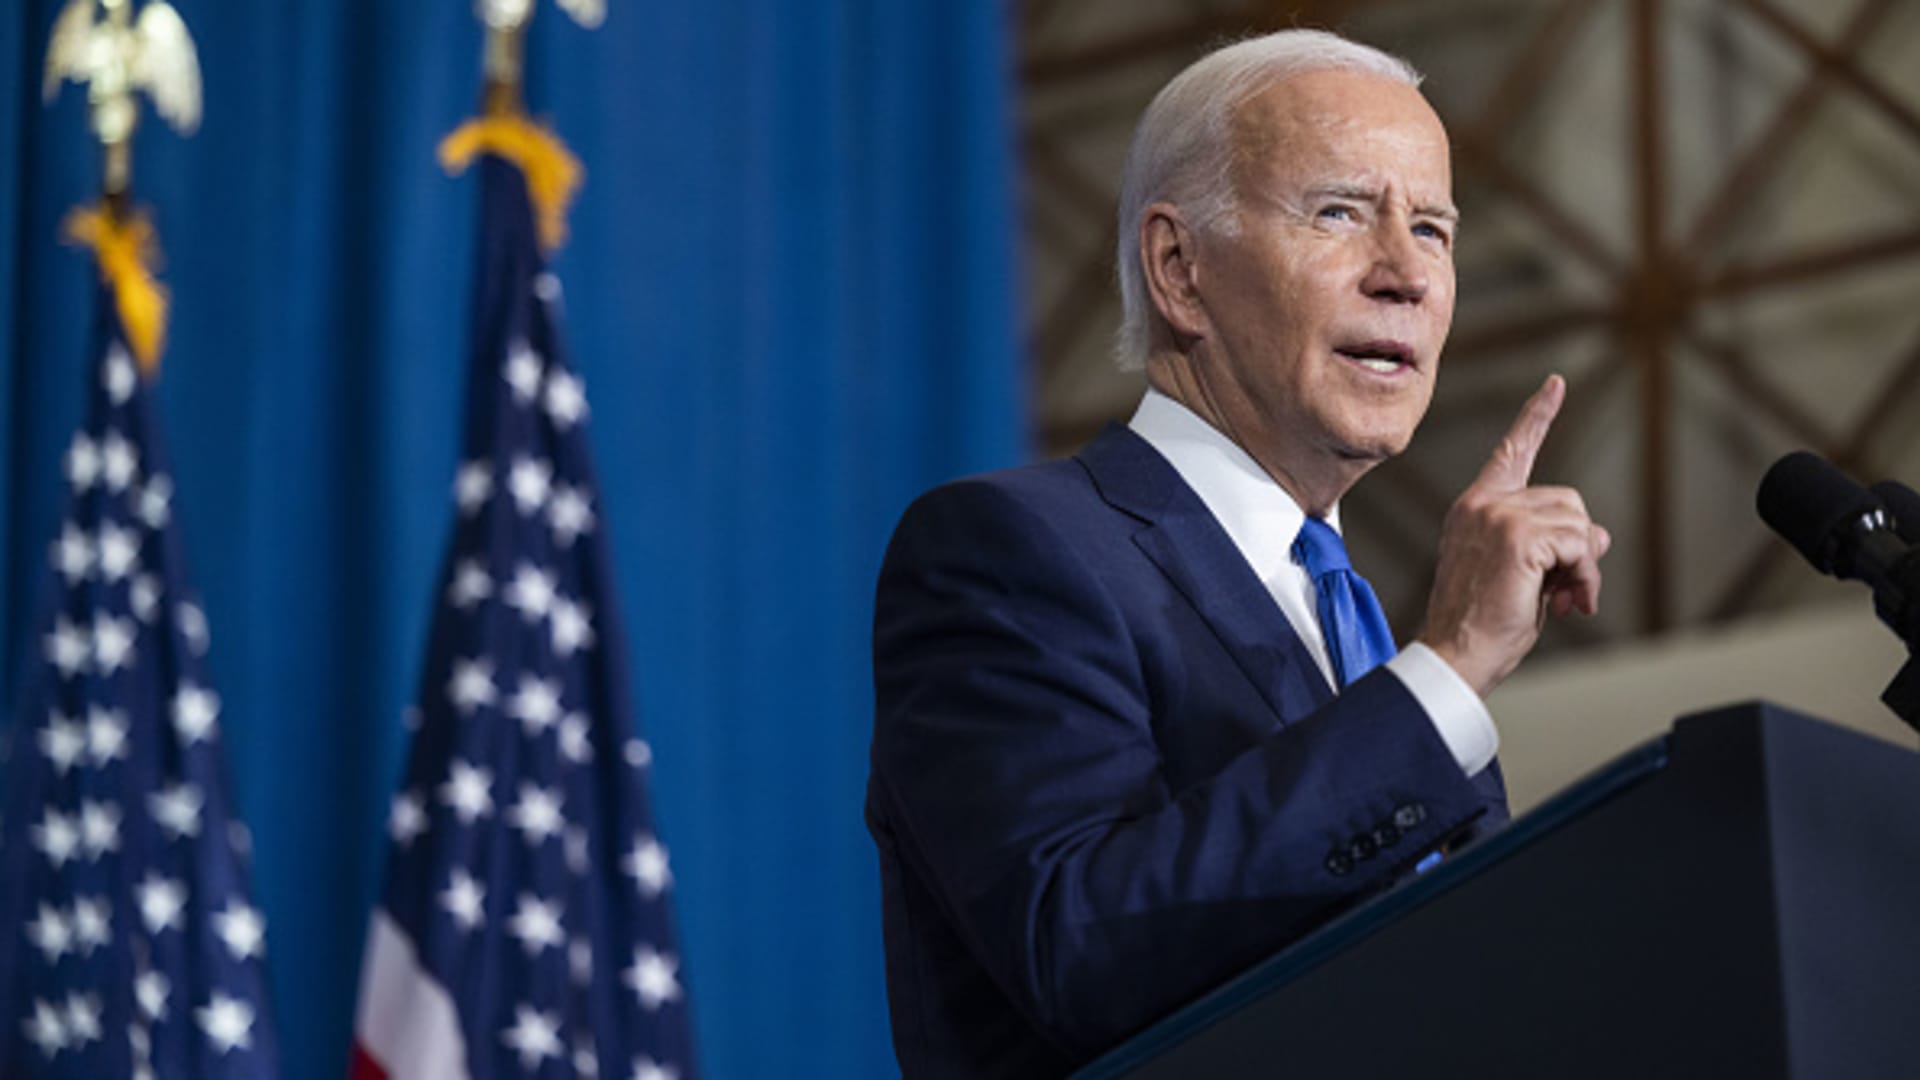 US President Joe Biden speaks at a Democratic National Committee event in Washington, DC, US, on Wednesday, Nov. 2, 2022.